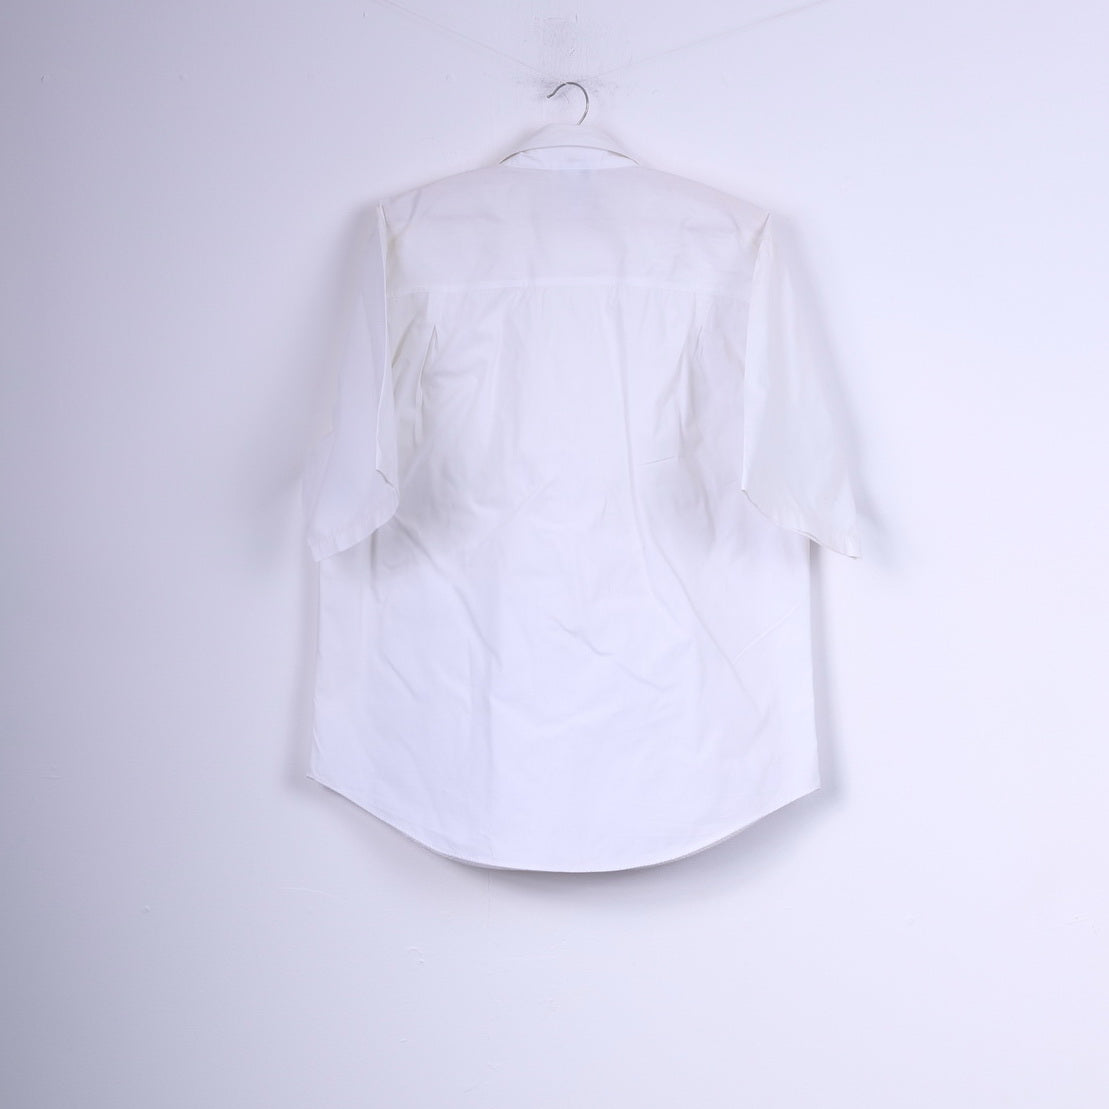 Jordache Jeanswear Mens S Casual Shirt White Short Sleeve Top Vintage